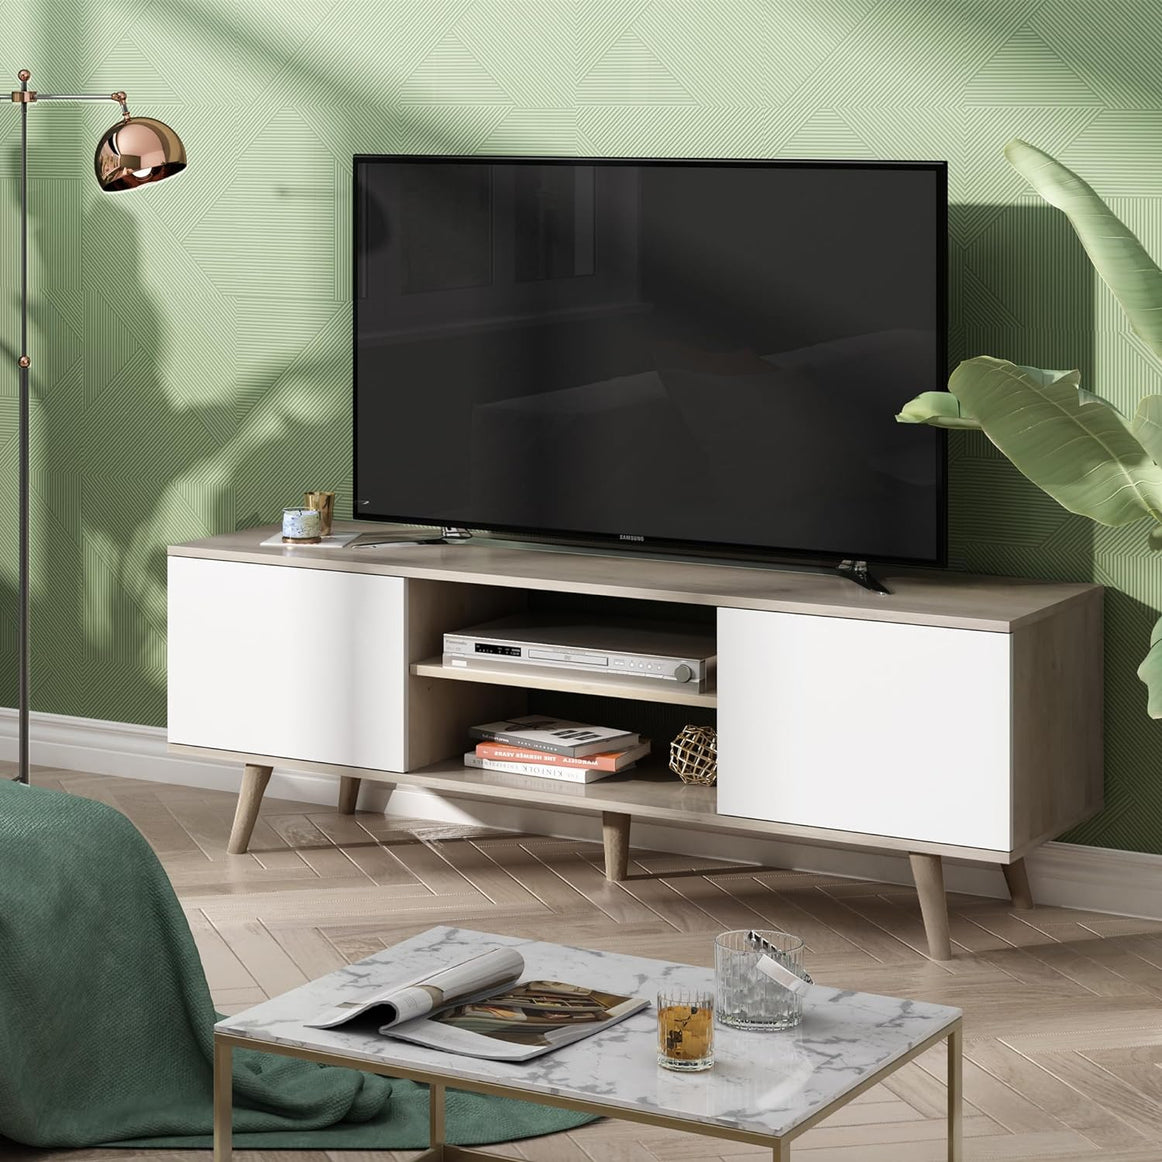 Spyder Craft Tv Unit With Wall Shelf Tv Stand With Bookshelf Wall Mounted With Shelf Modern Leg 180 cm White - Basket Walnut M16 White